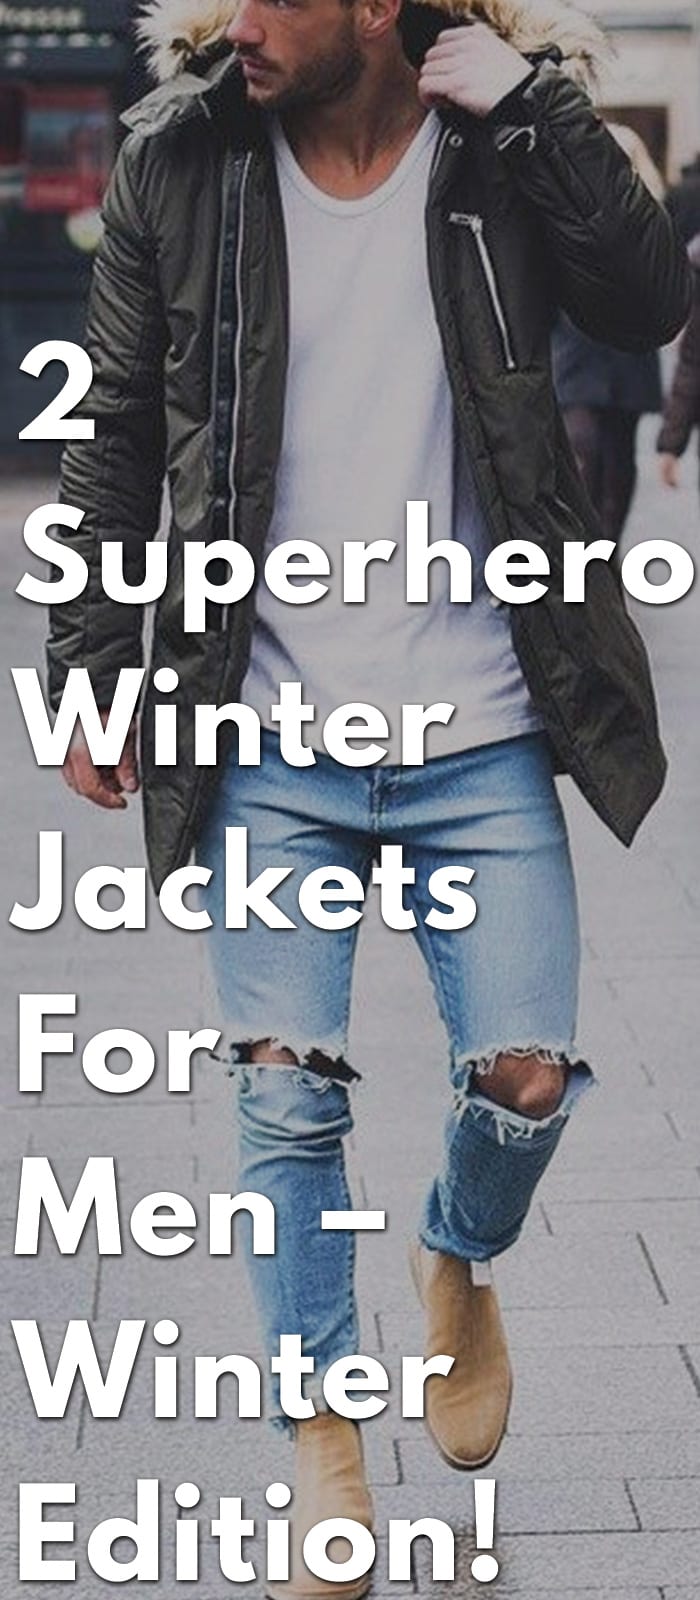 2-Superhero-Winter-Jackets-For-Men-Winter-Edition!